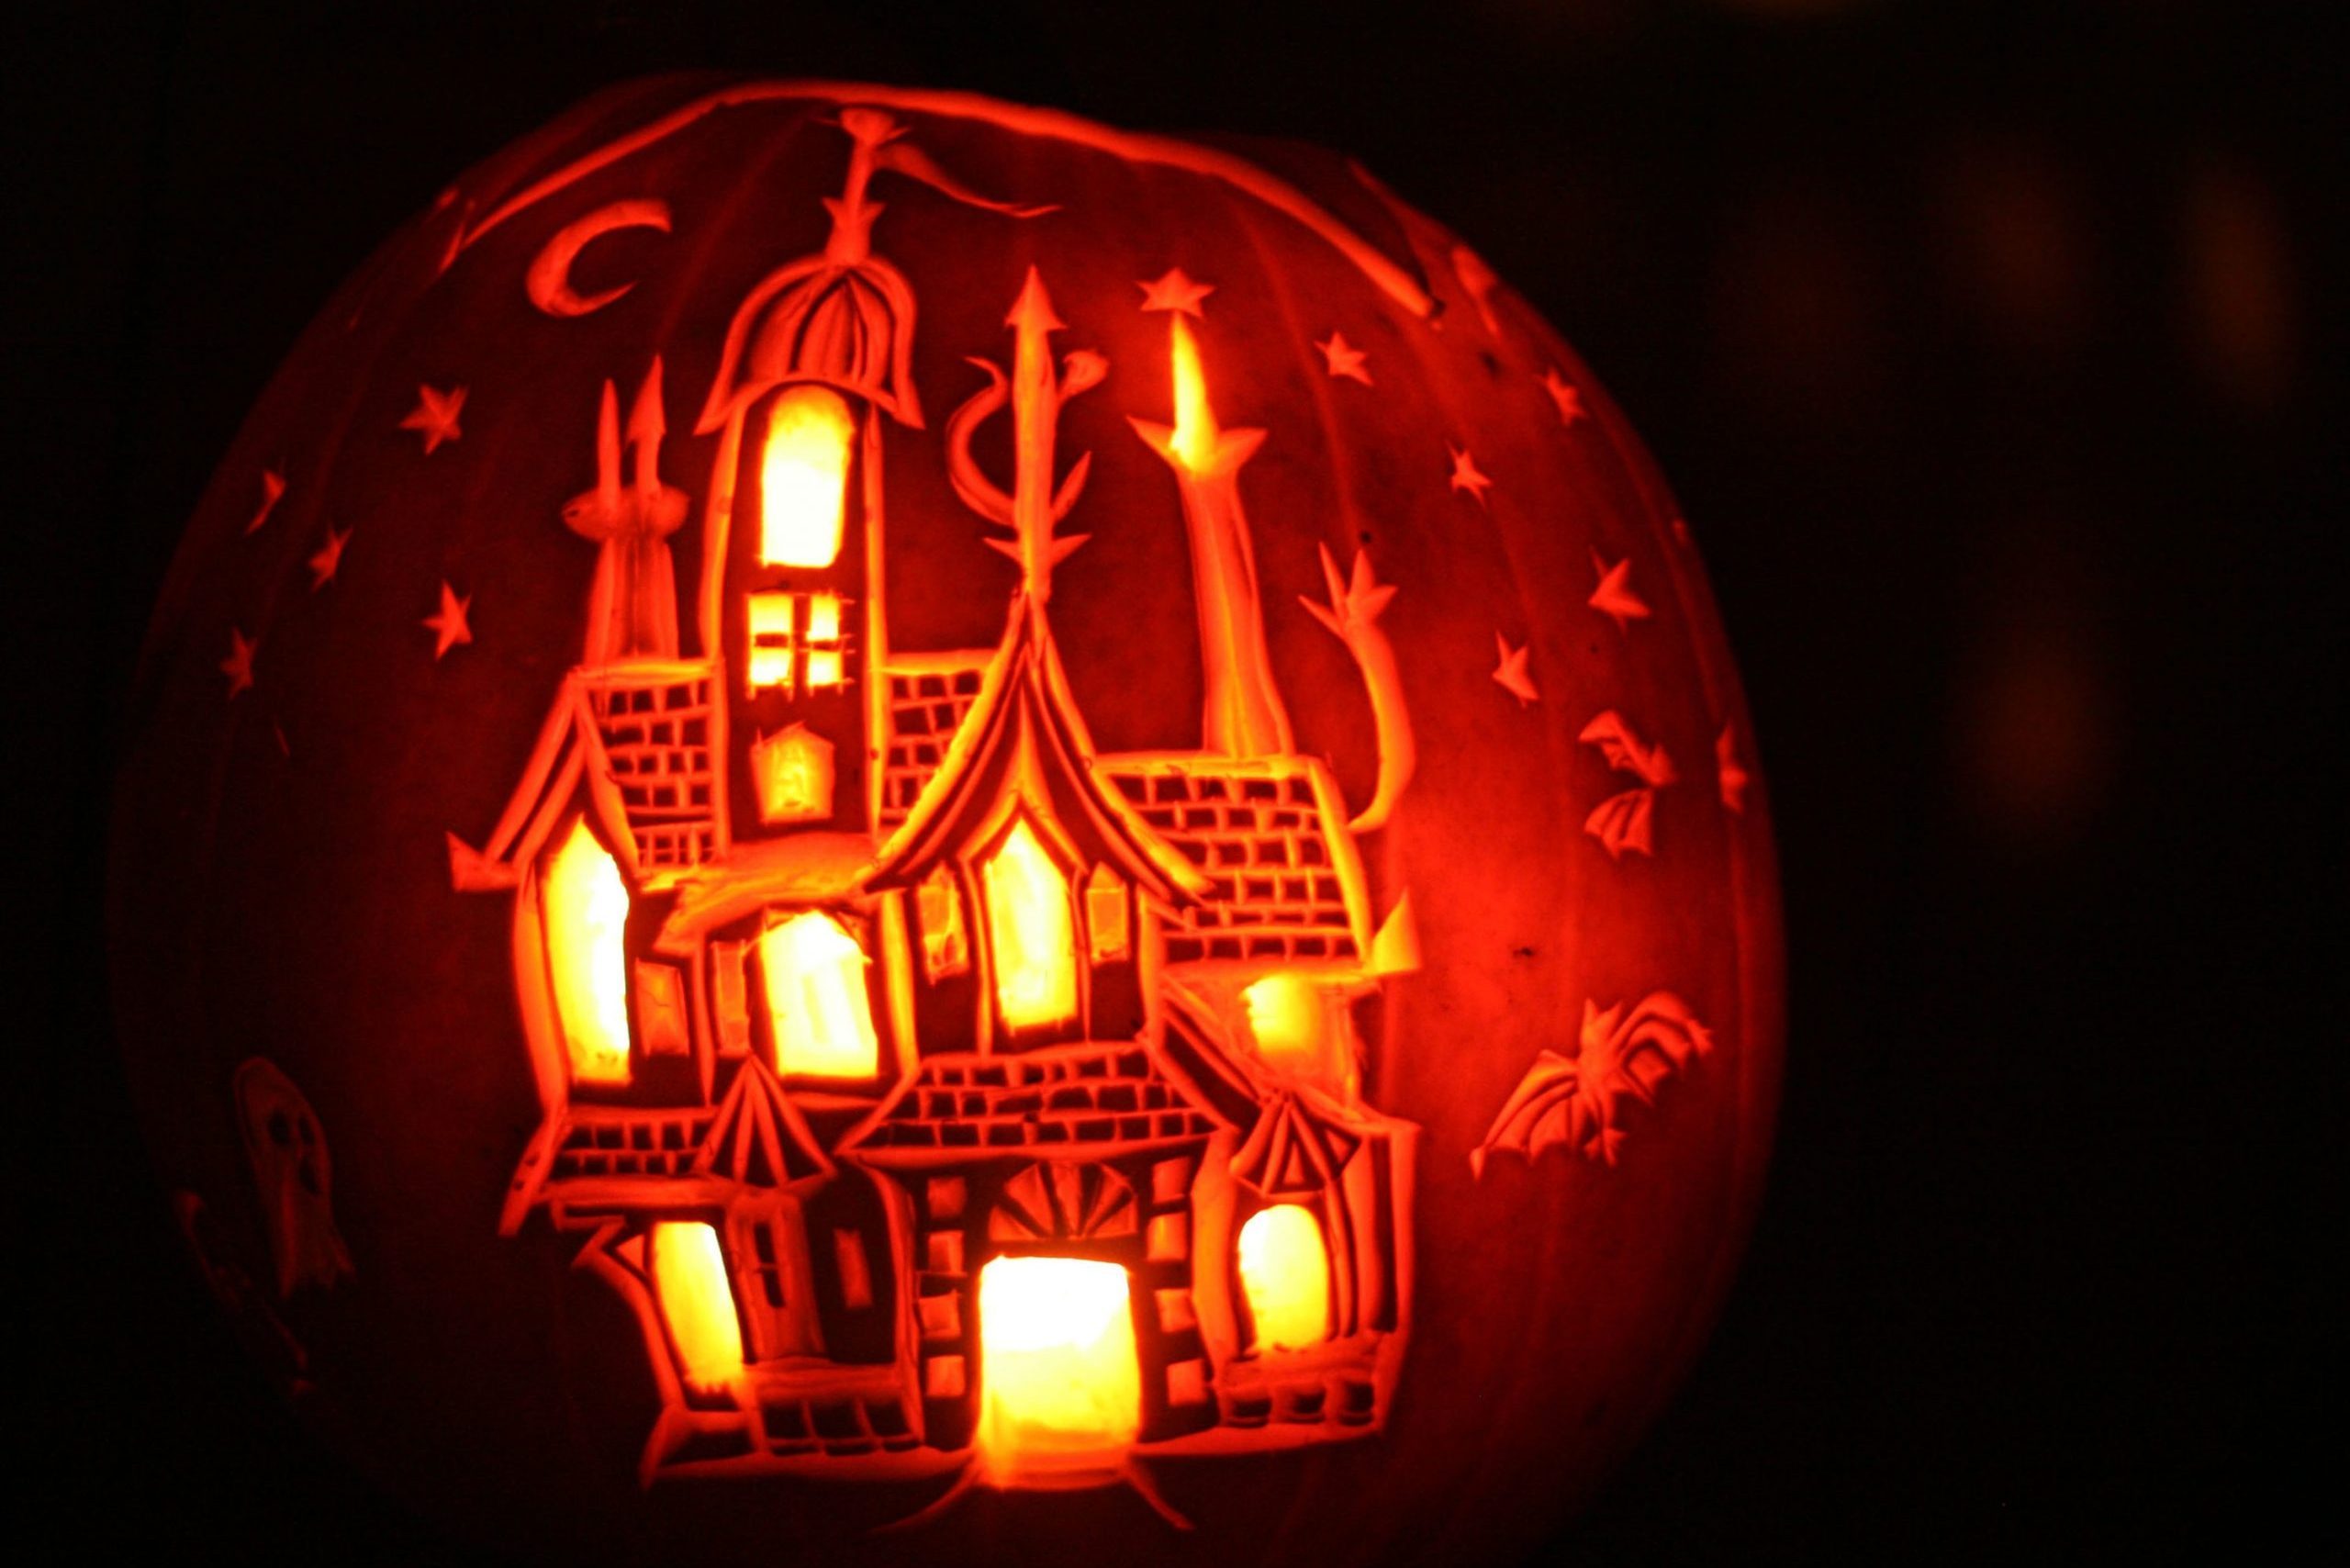 Pumpkin carving, reggae festival among Halloween festivities this